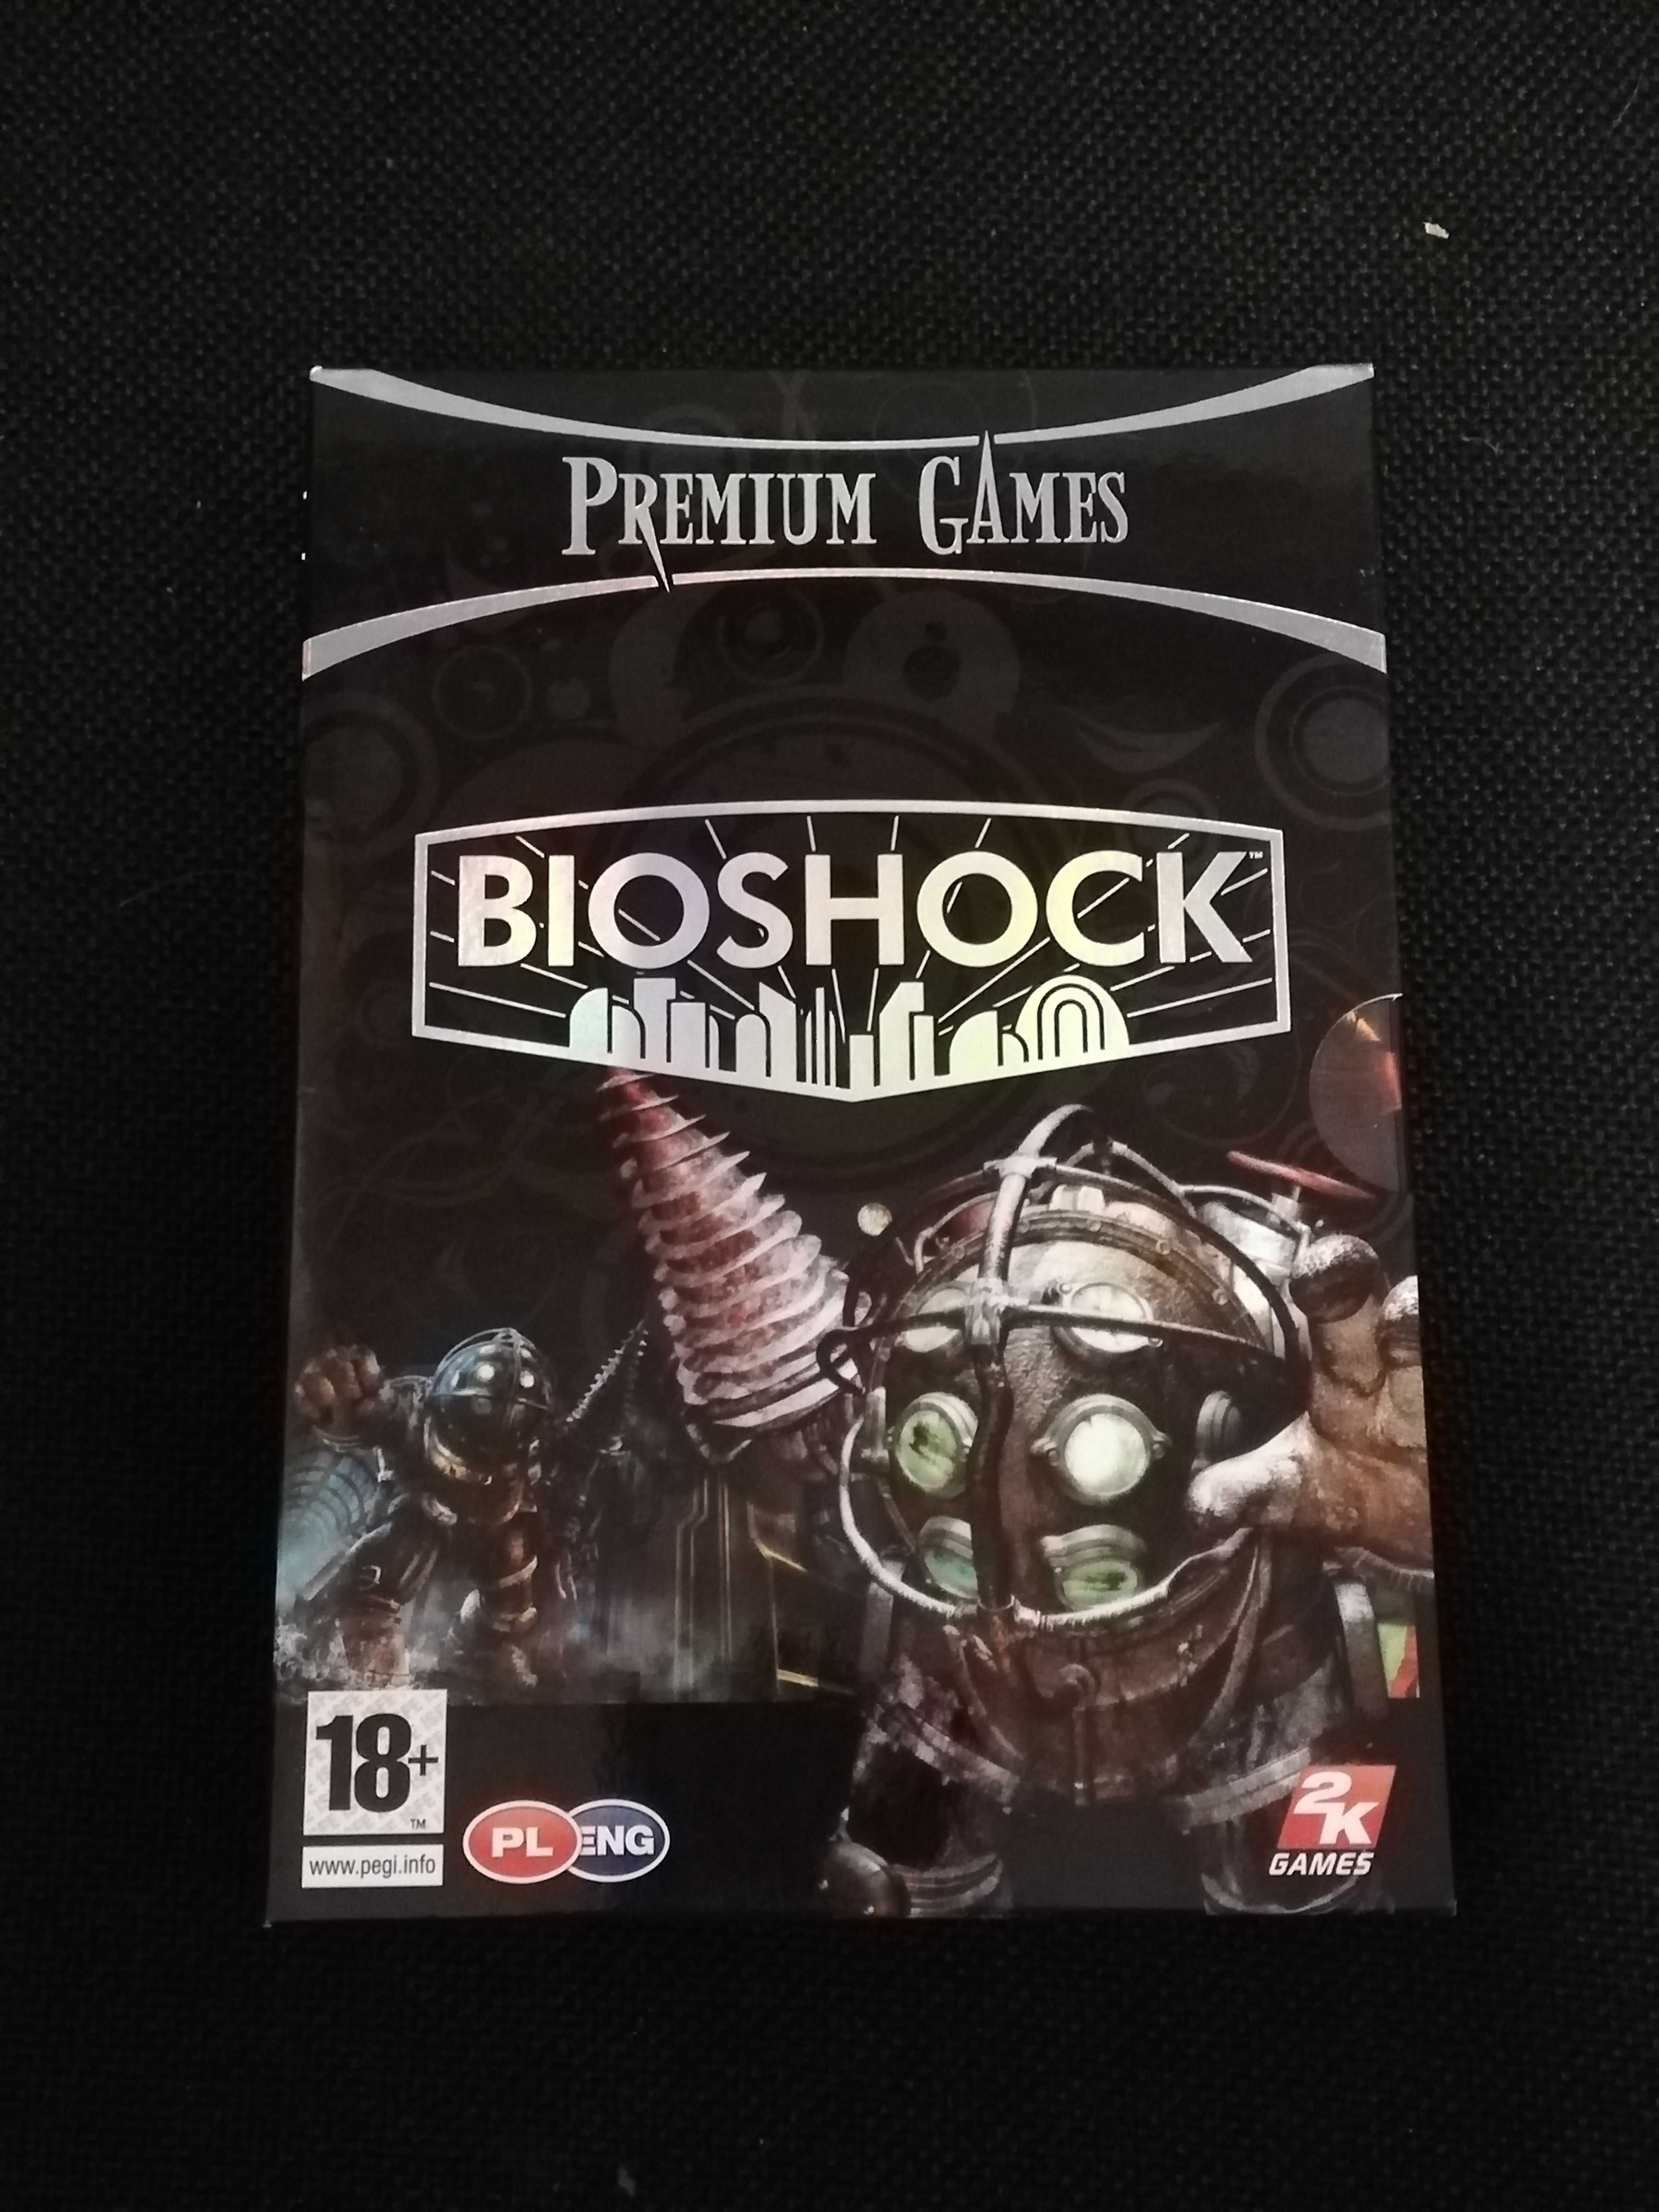 Pudełko z gry Bioshock na Komputer PC Premium Games